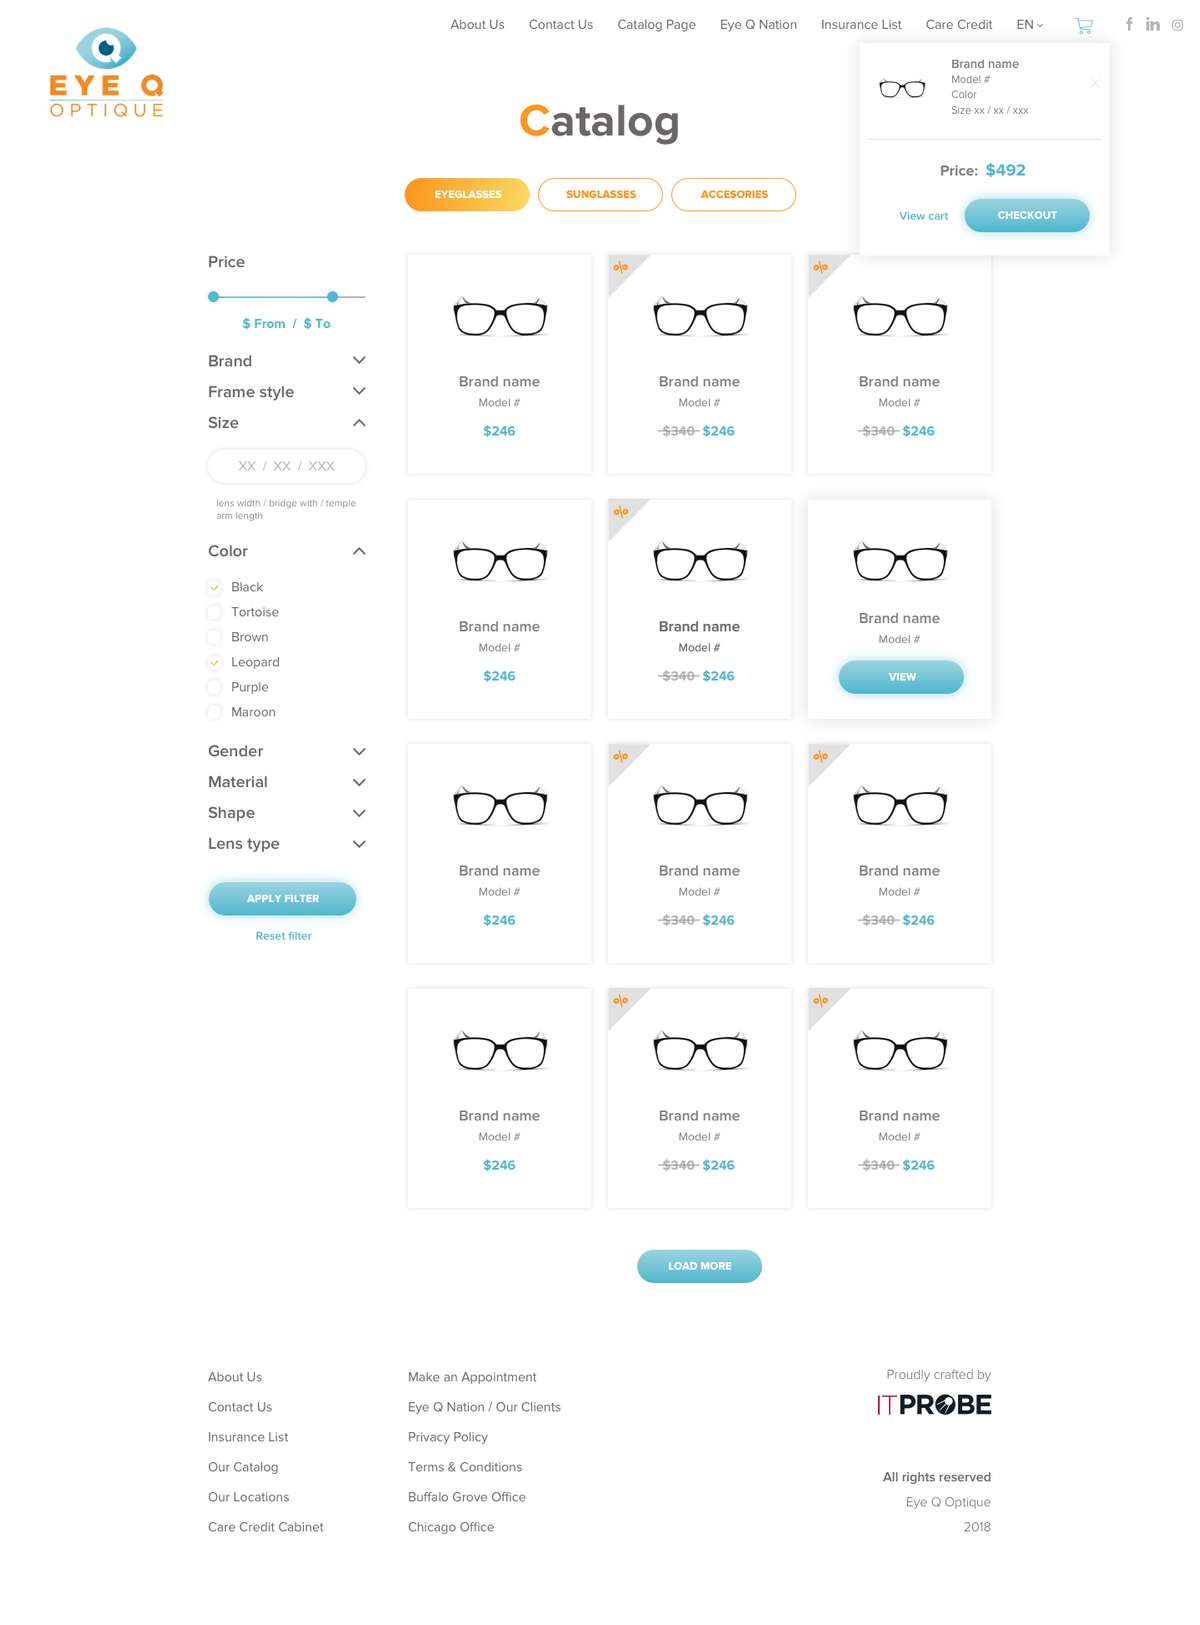 Eye Q Optique - Catalog Page Design